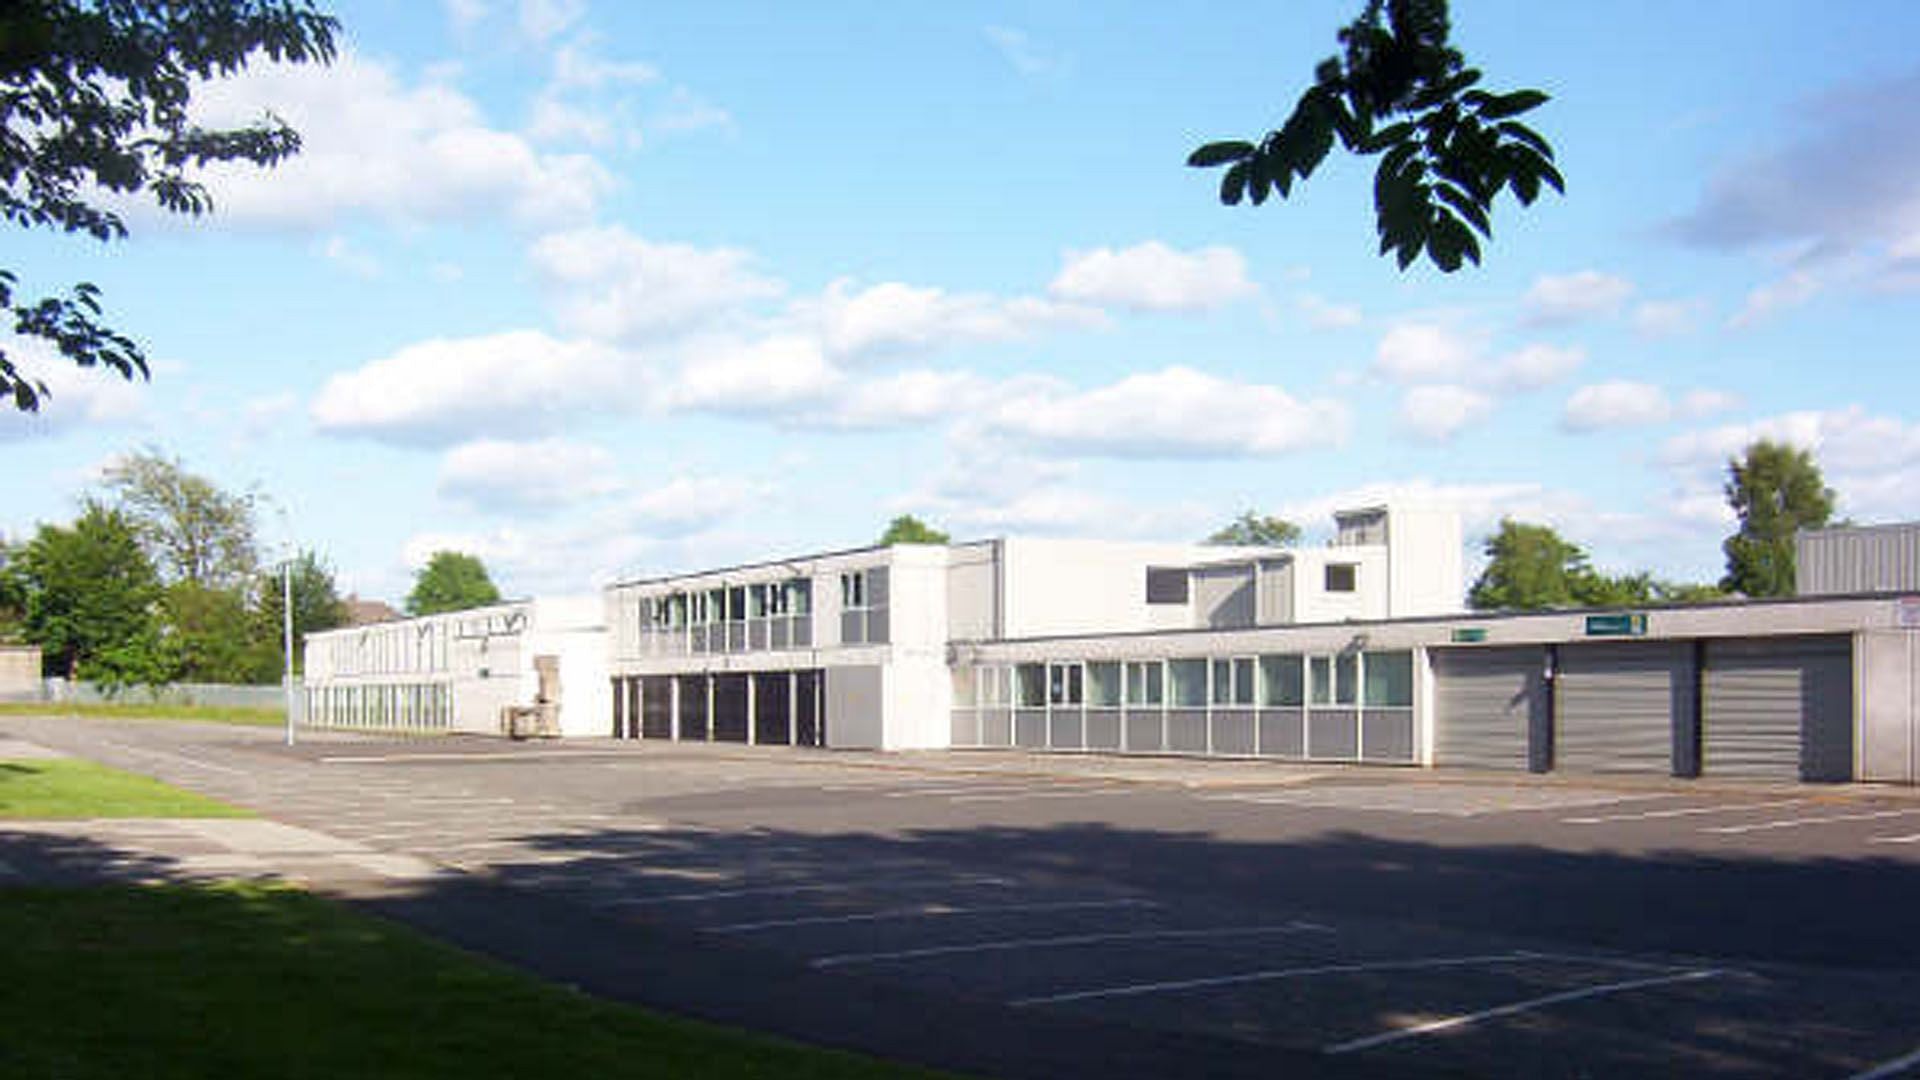 Bannerman High School (image via Wikimedia Commons)